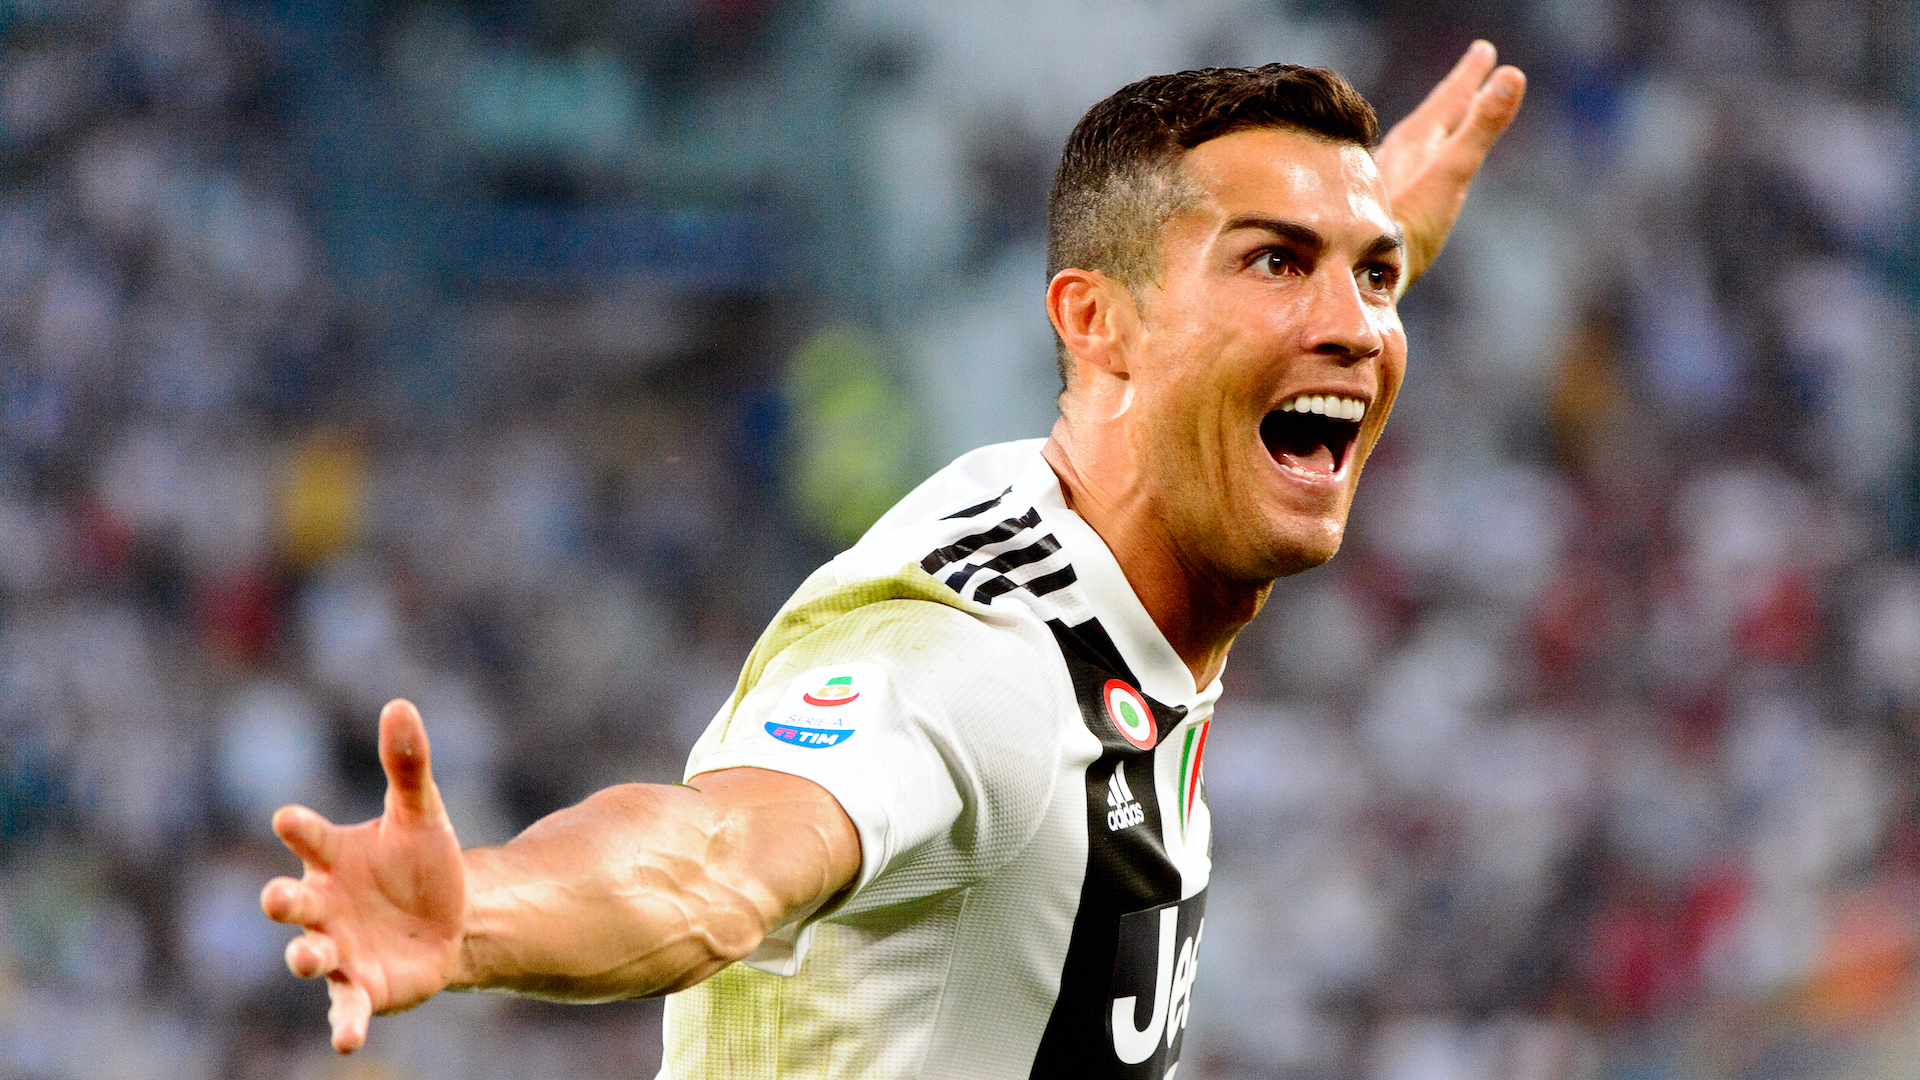 Cristiano Ronaldo celebrates after scoring a goal for Juventus